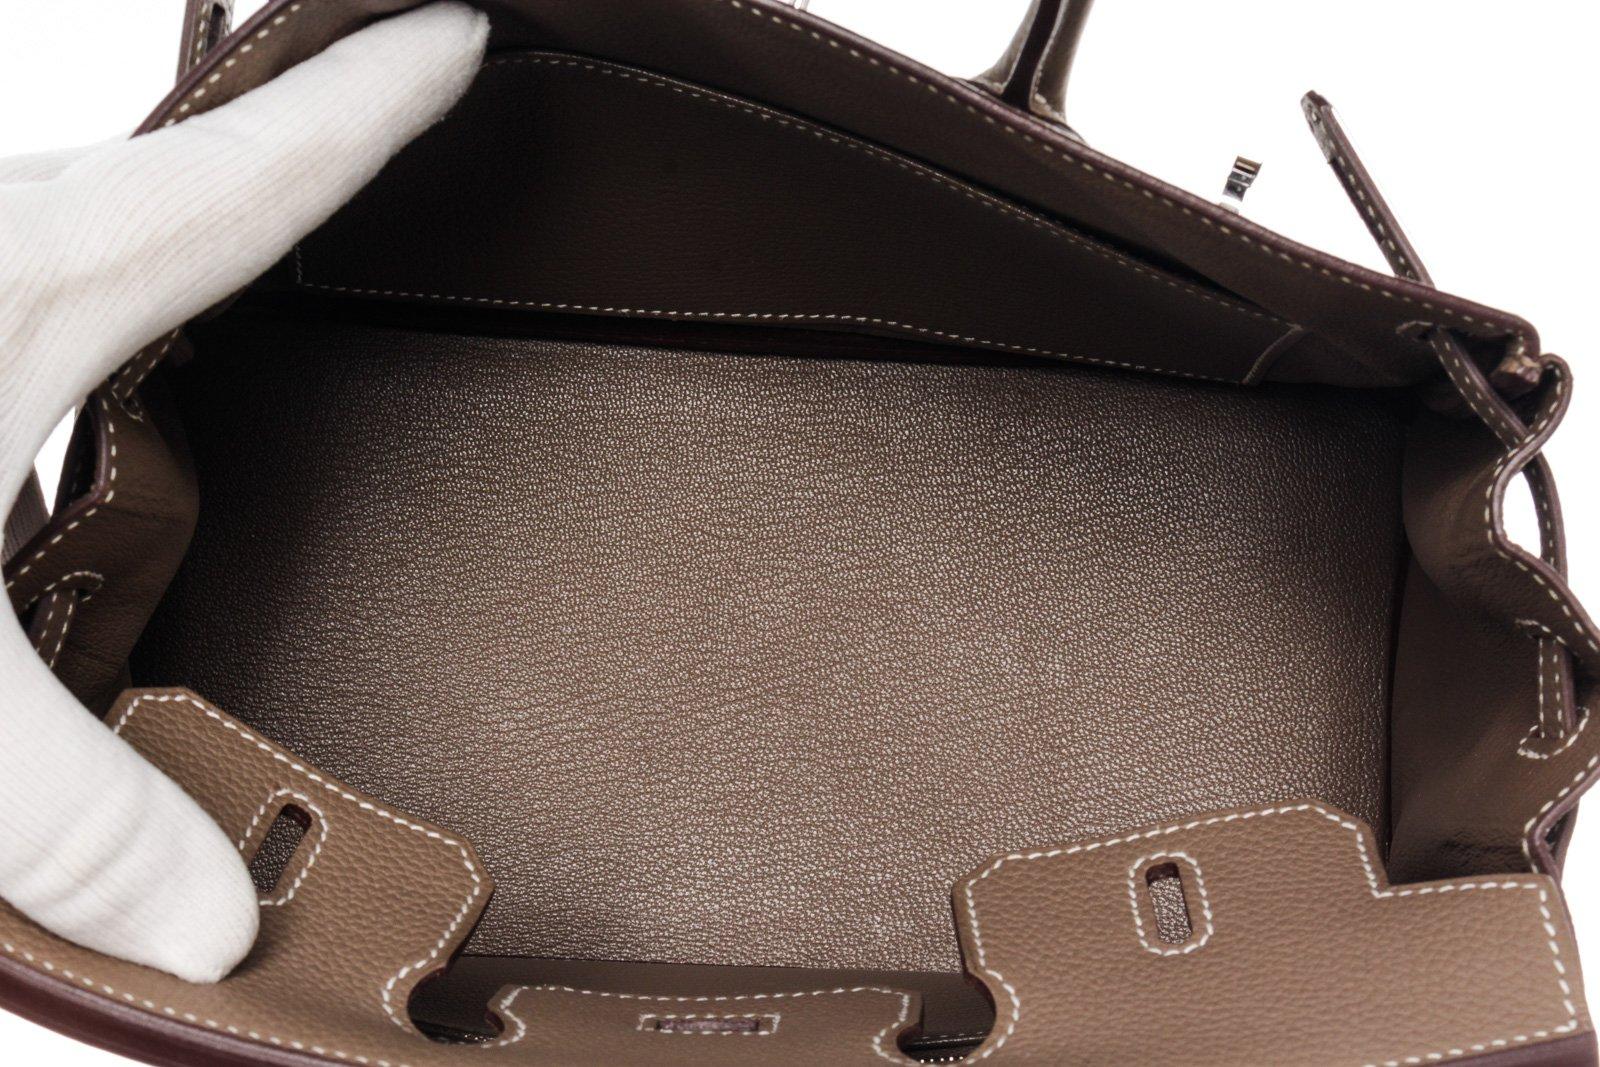 Hermes Brown Leather Birkin 25cm Satchel Bag with leather, gold-tone hardware, trim leather, interior slip pocket, dual top handle and turn lock closure.

54689MSC